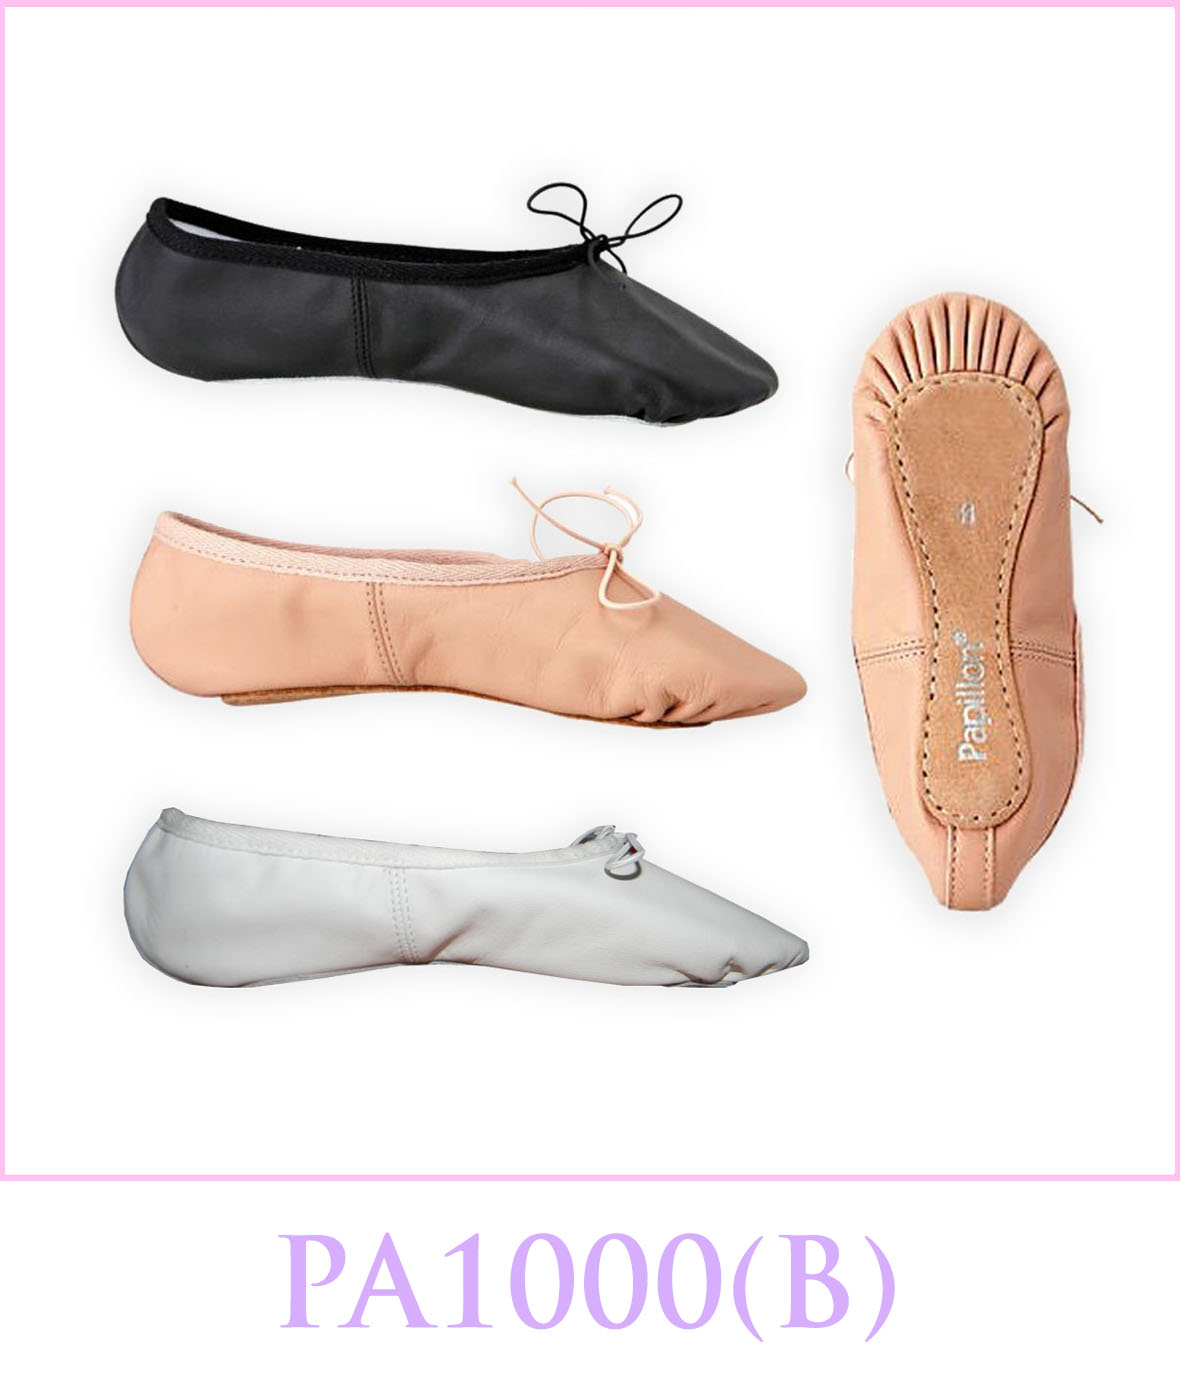 Papillon balletschoenen | PK1000 | PA1000 | Roze, zwart, wit